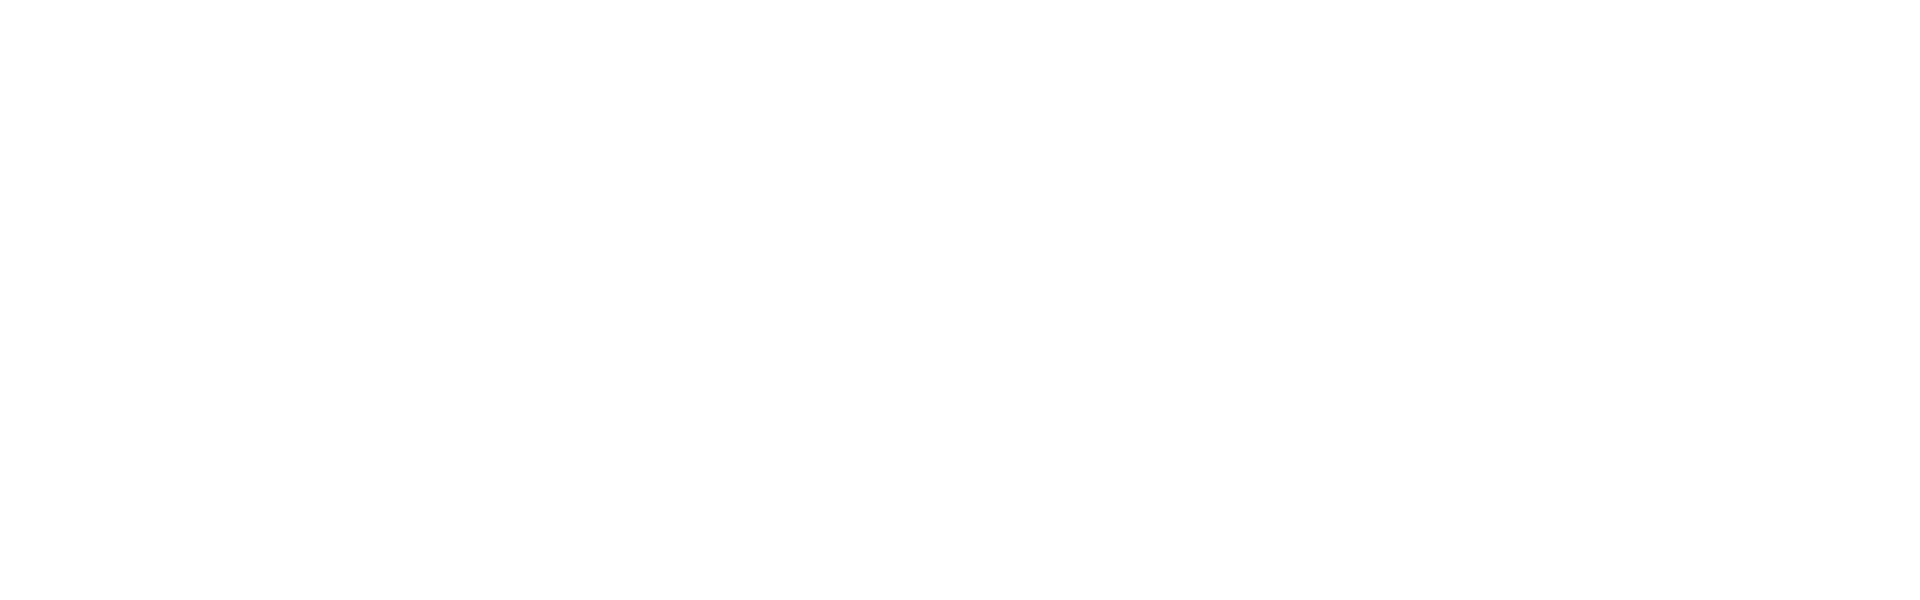 Ohmco carwash marketing logo design